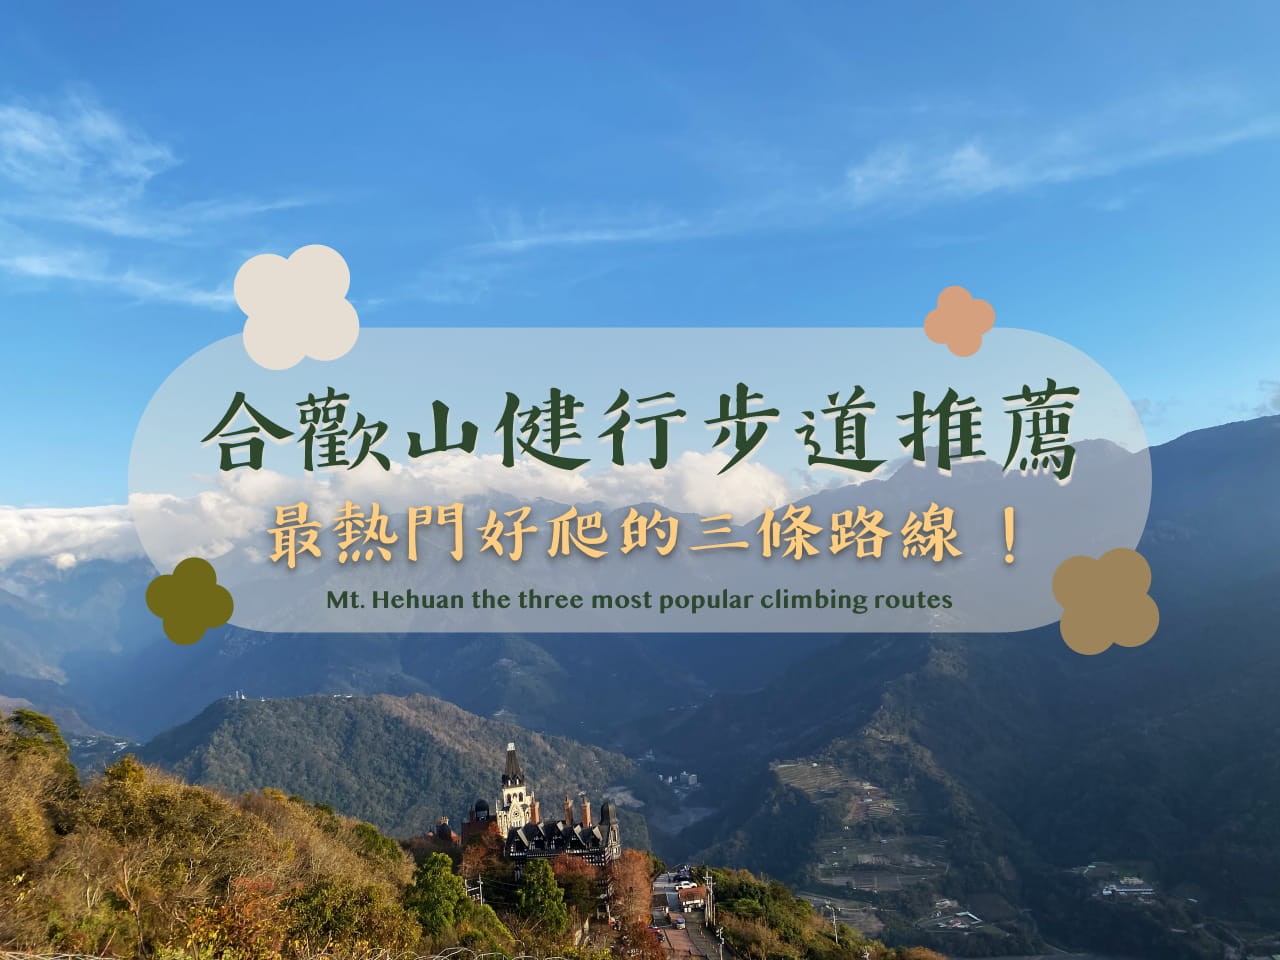 Mt. Hehuan the three most popular climbing routes.